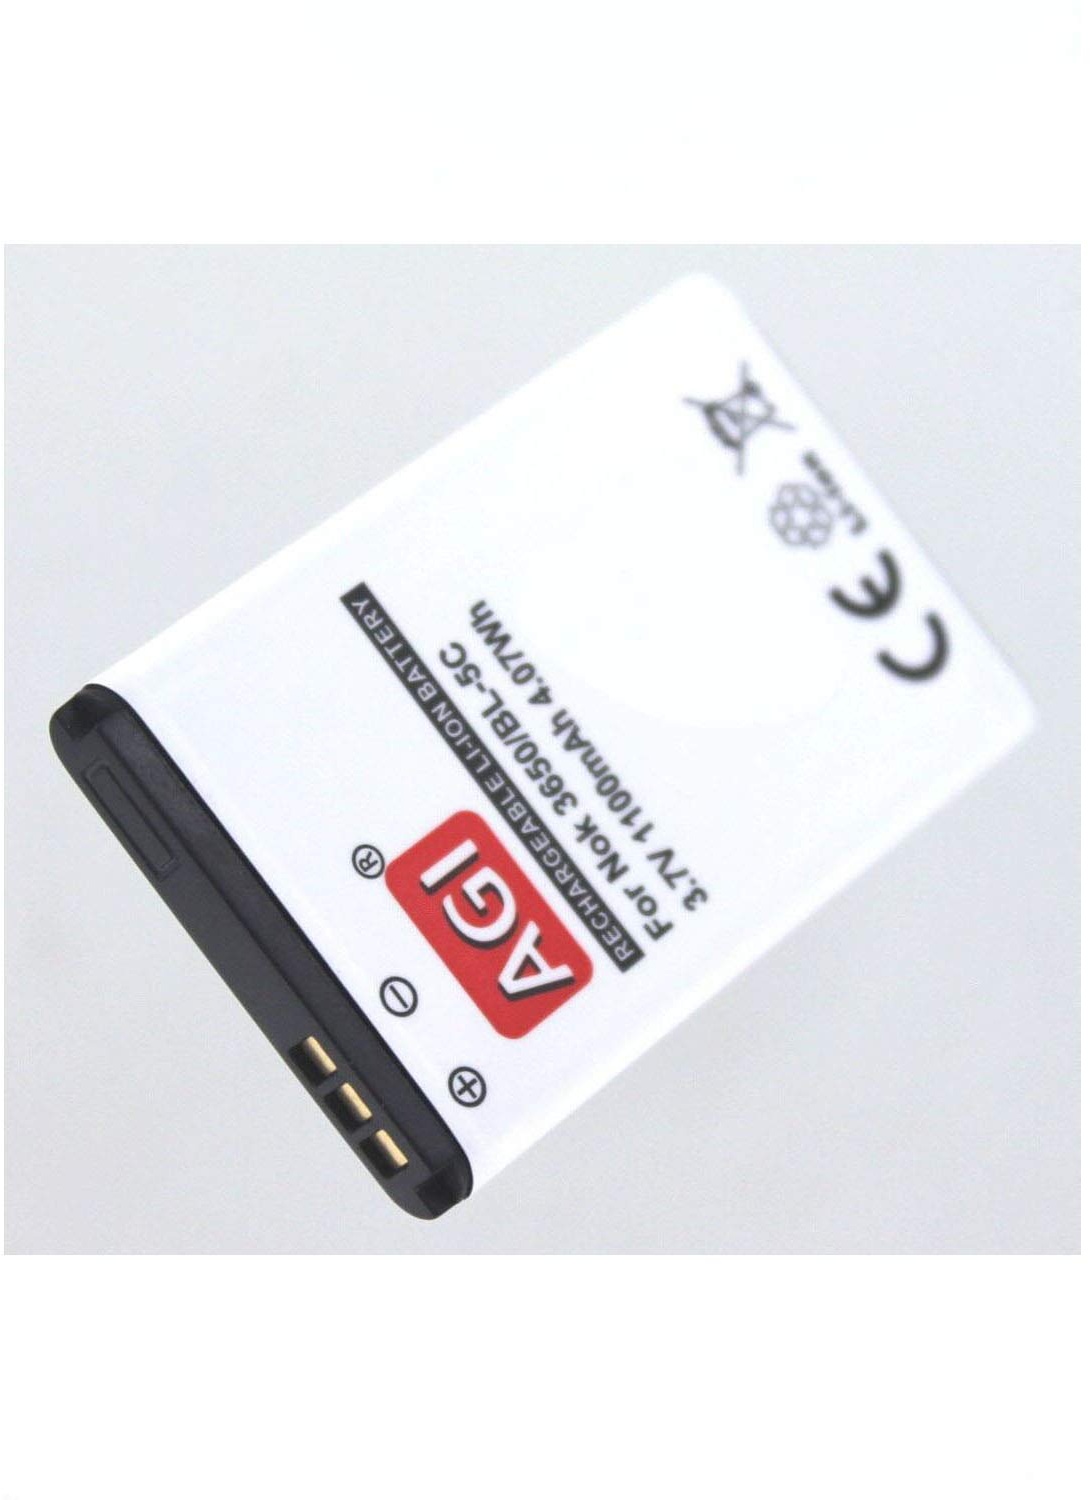 Akkuversum Akku kompatibel mit Tiptel Ergophone 6070, Handy/Smartphone Li-Ion Batterie